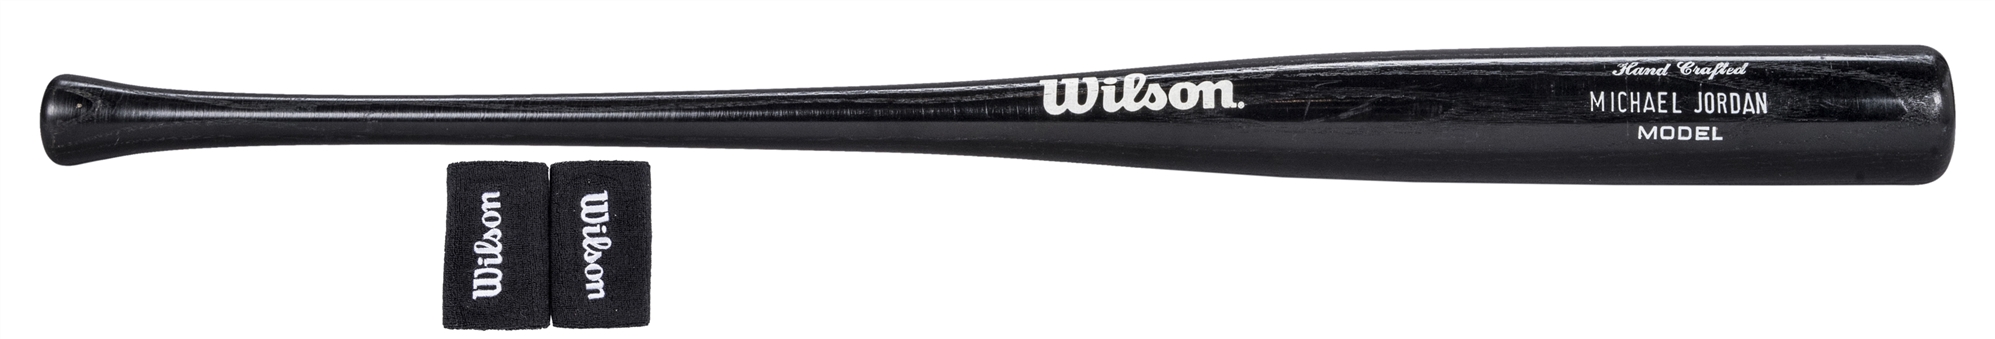 1994 Michael Jordan Game Used Wilson WC209 Pro Model Bat & Wristbands (PSA/DNA)